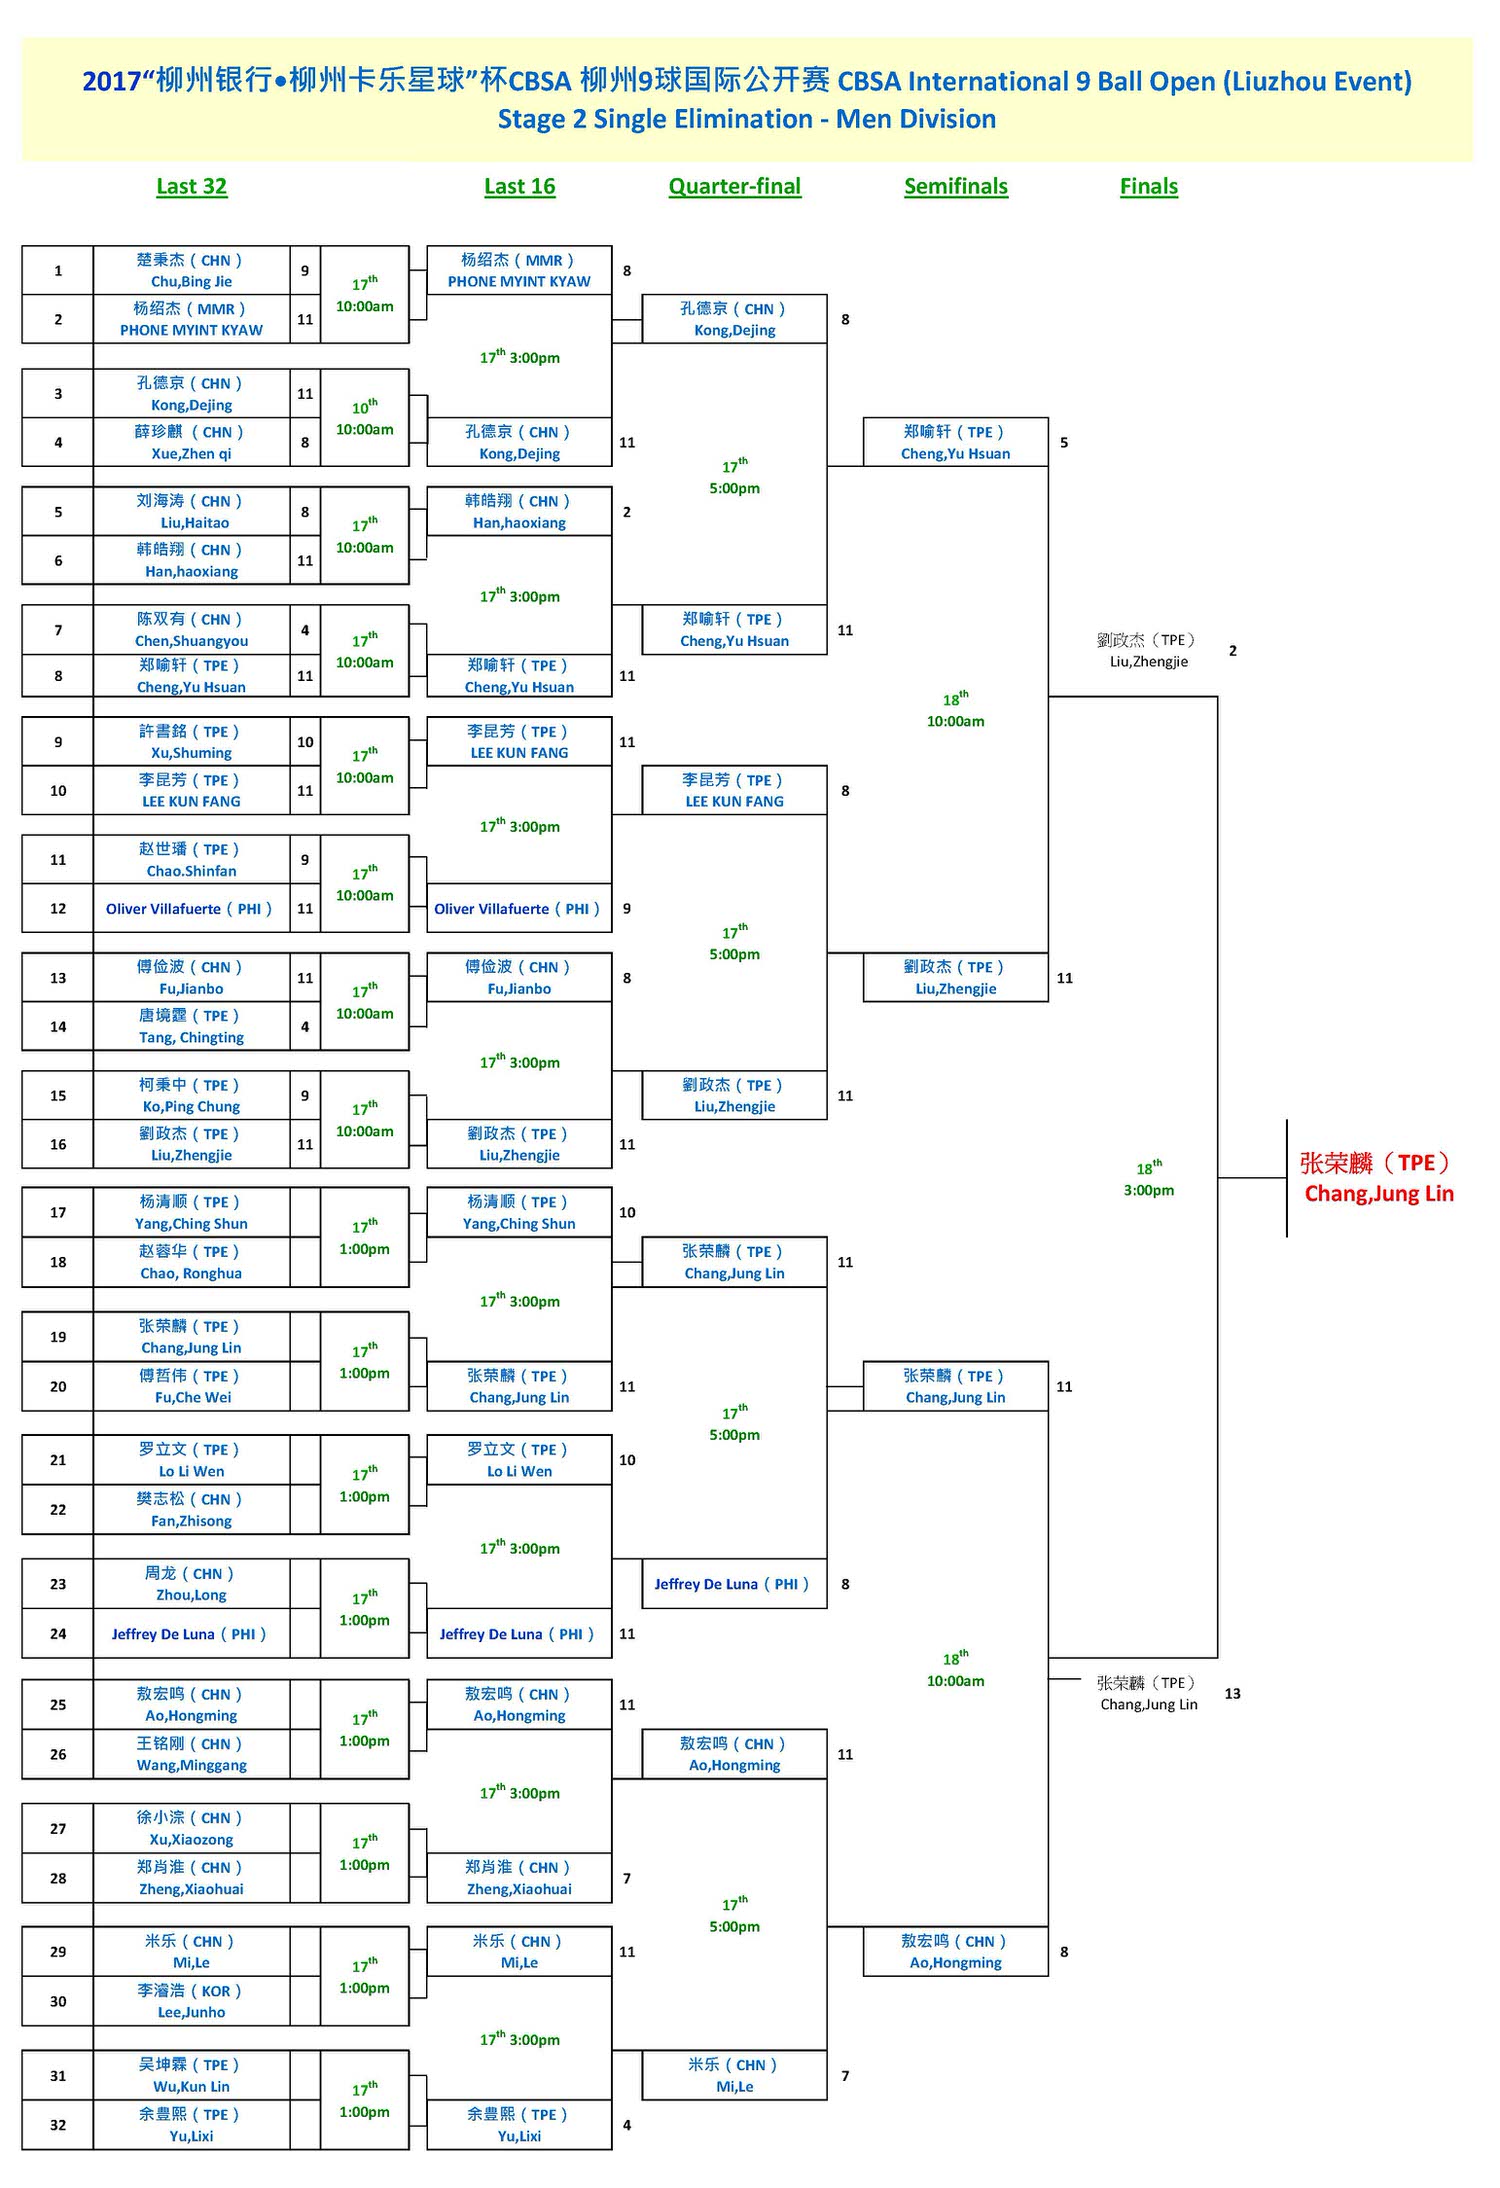 2017 CBSA International Liuzhou 9 Ball Open - Men Single Elimination Brackets